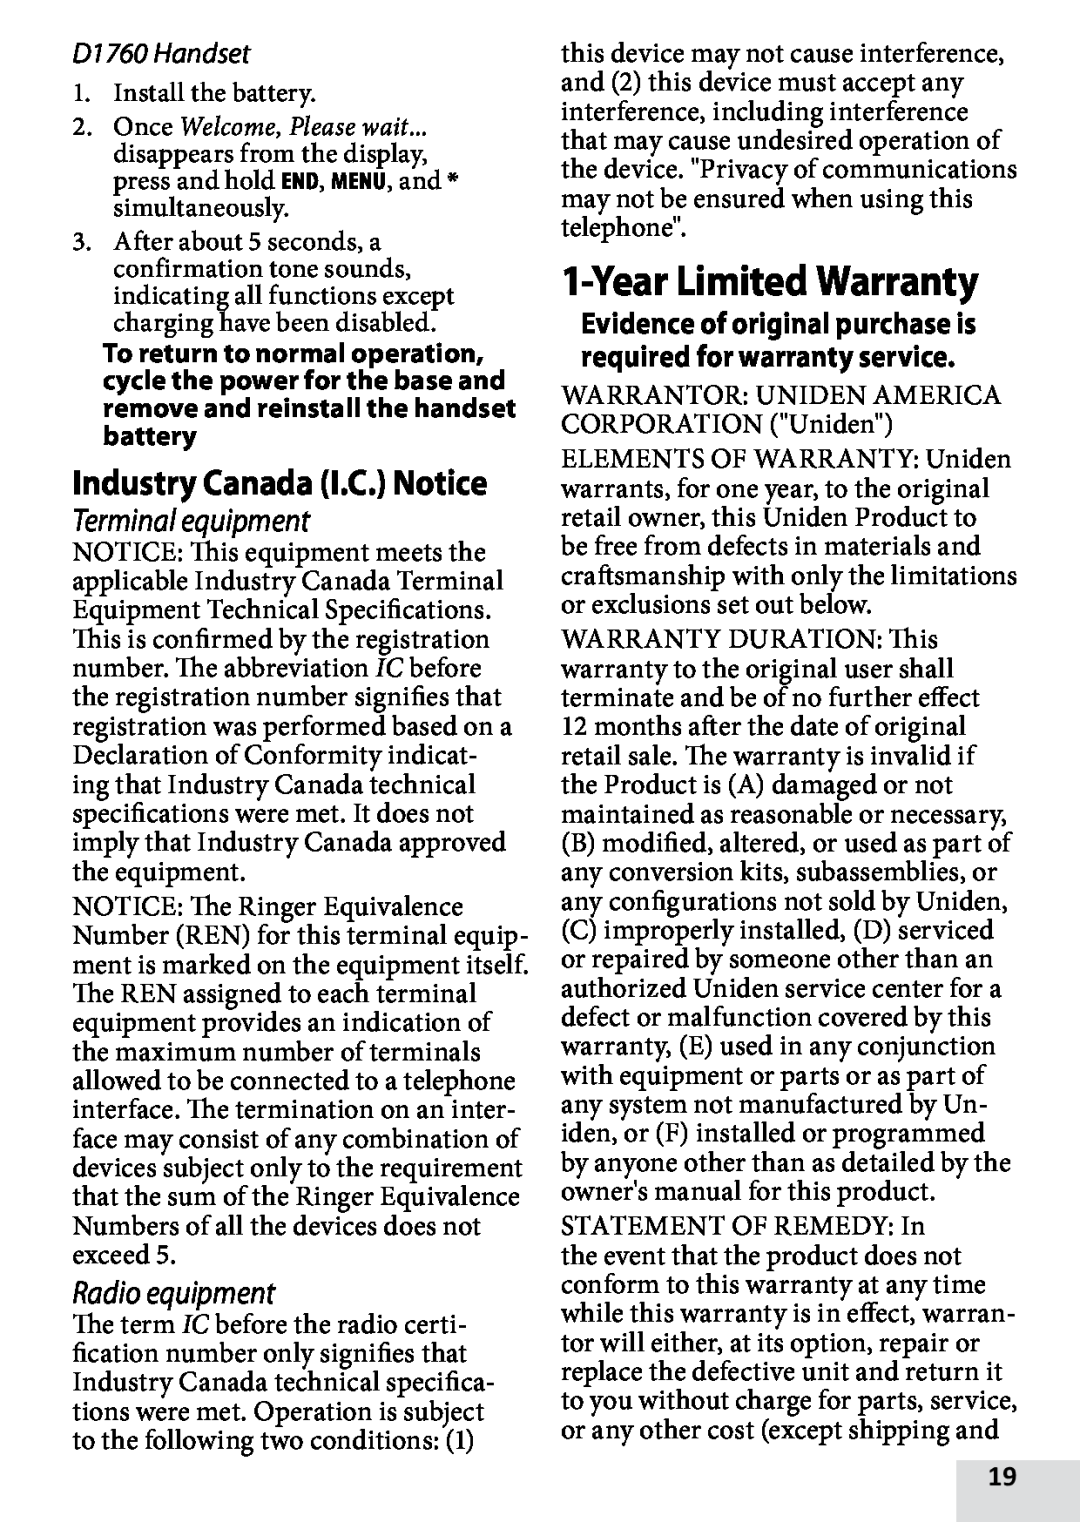 Uniden D1760-11, D1760-12, DRX100 YearLimited Warranty, Industry Canada I.C. Notice, Terminal equipment, Radio equipment 